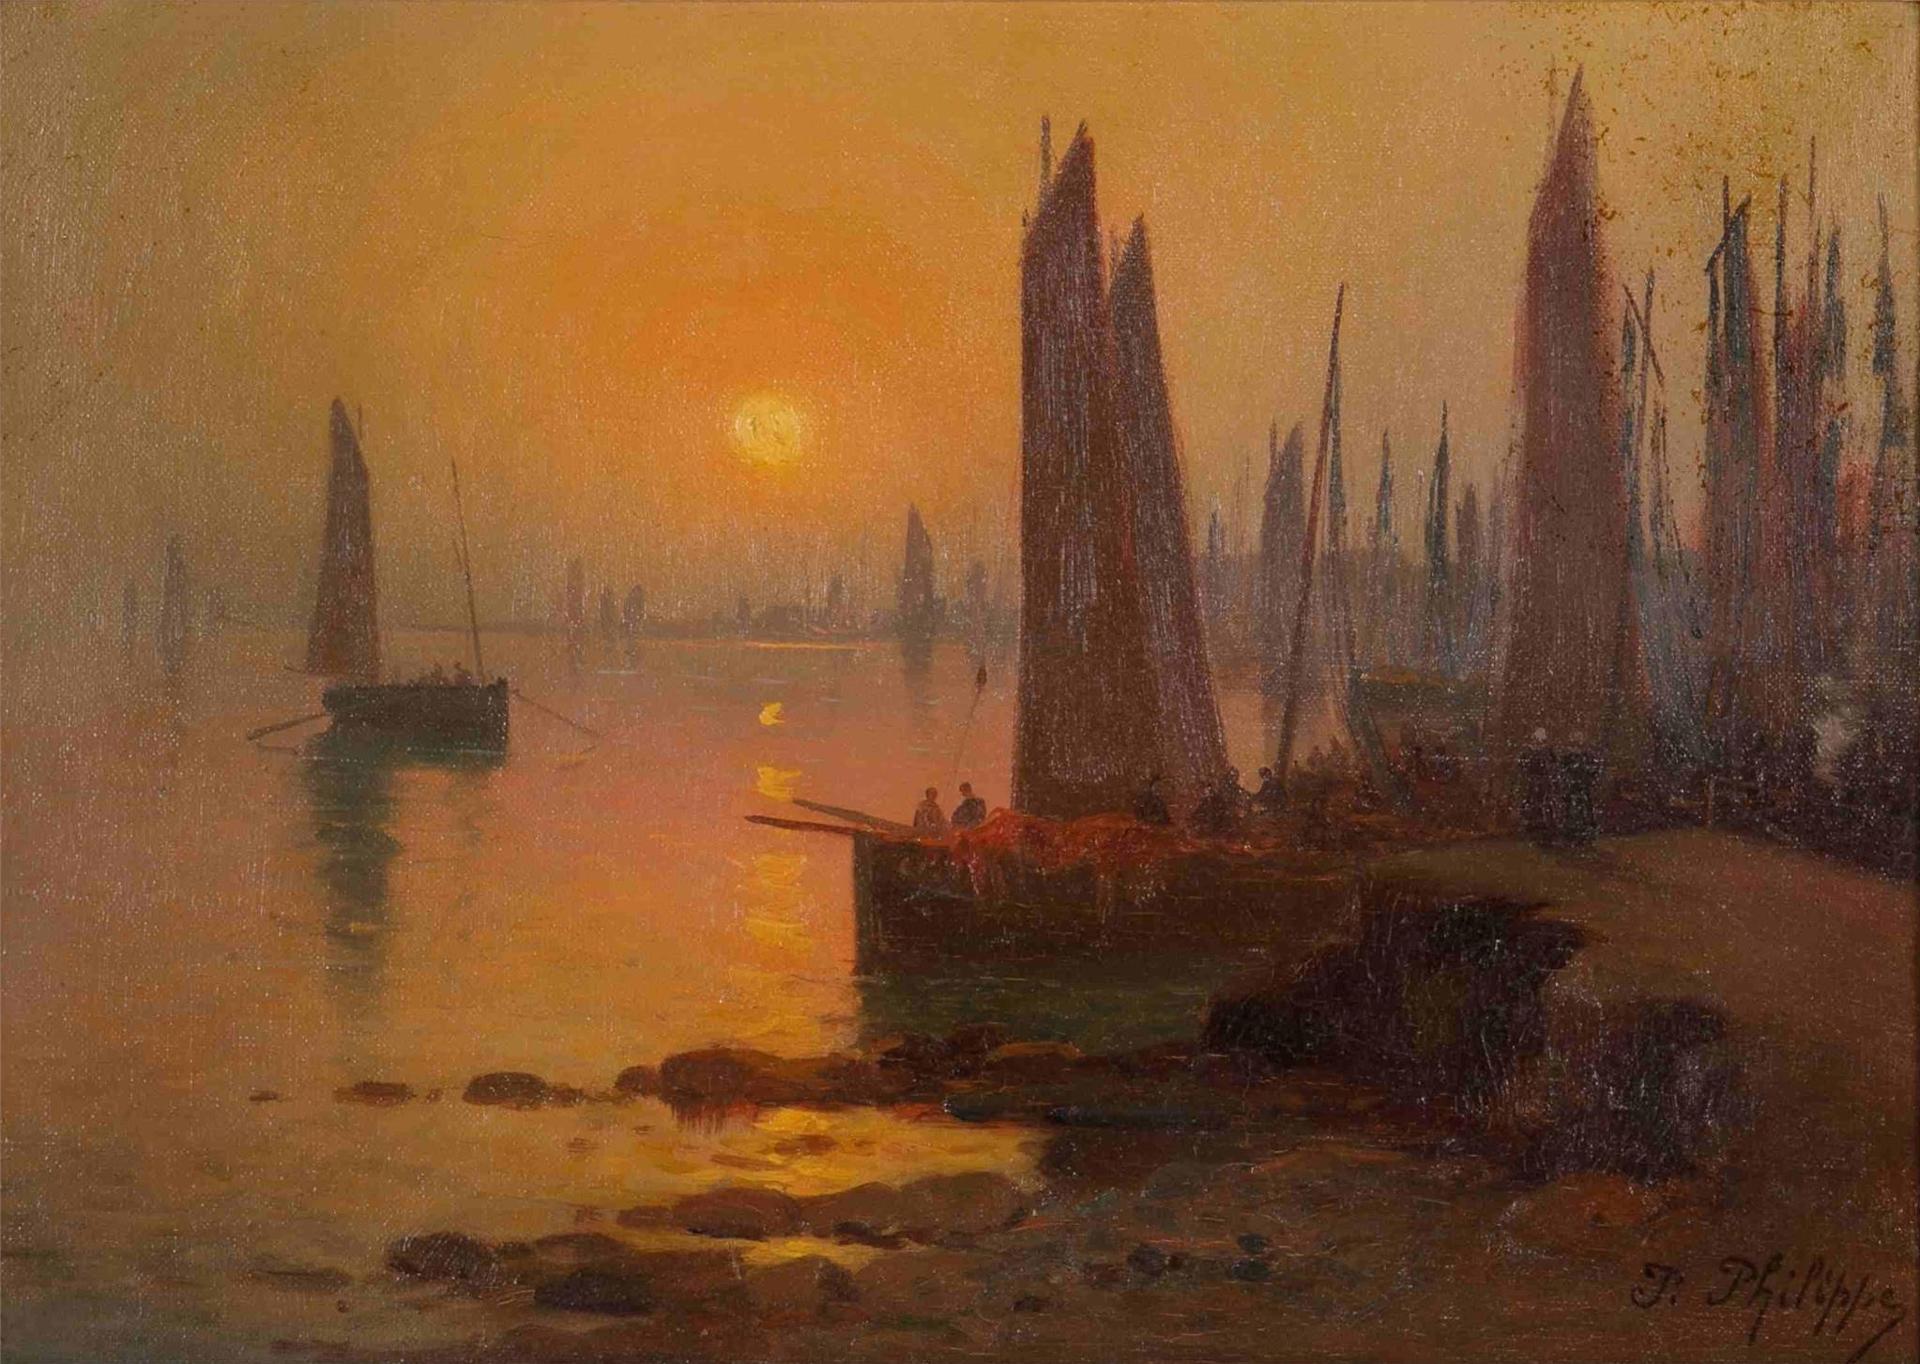 Paul Philippe (1870-1930) - Oil on canvas